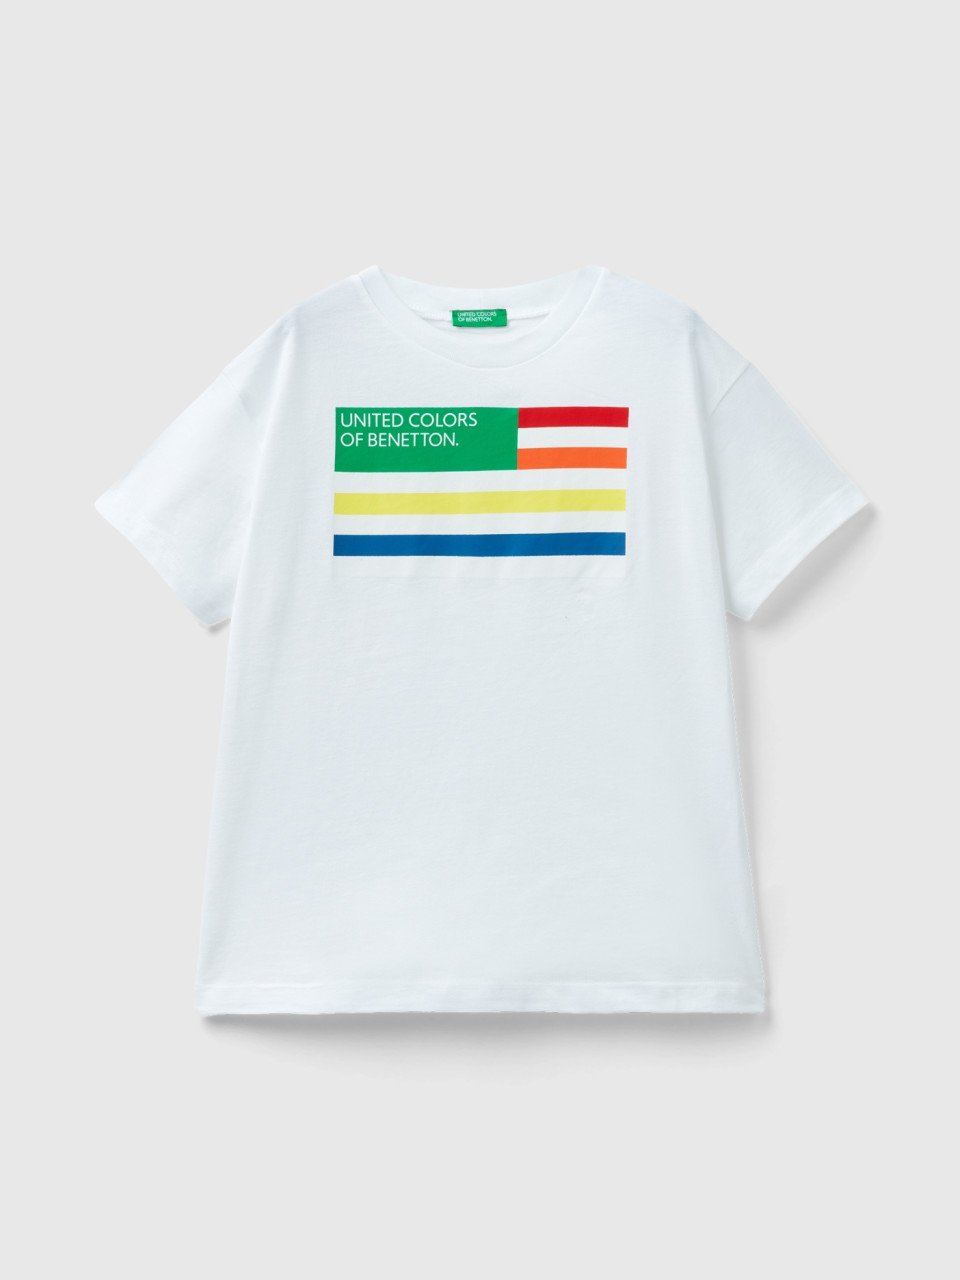 Benetton, 100% Organic Cotton T-shirt, White, Kids